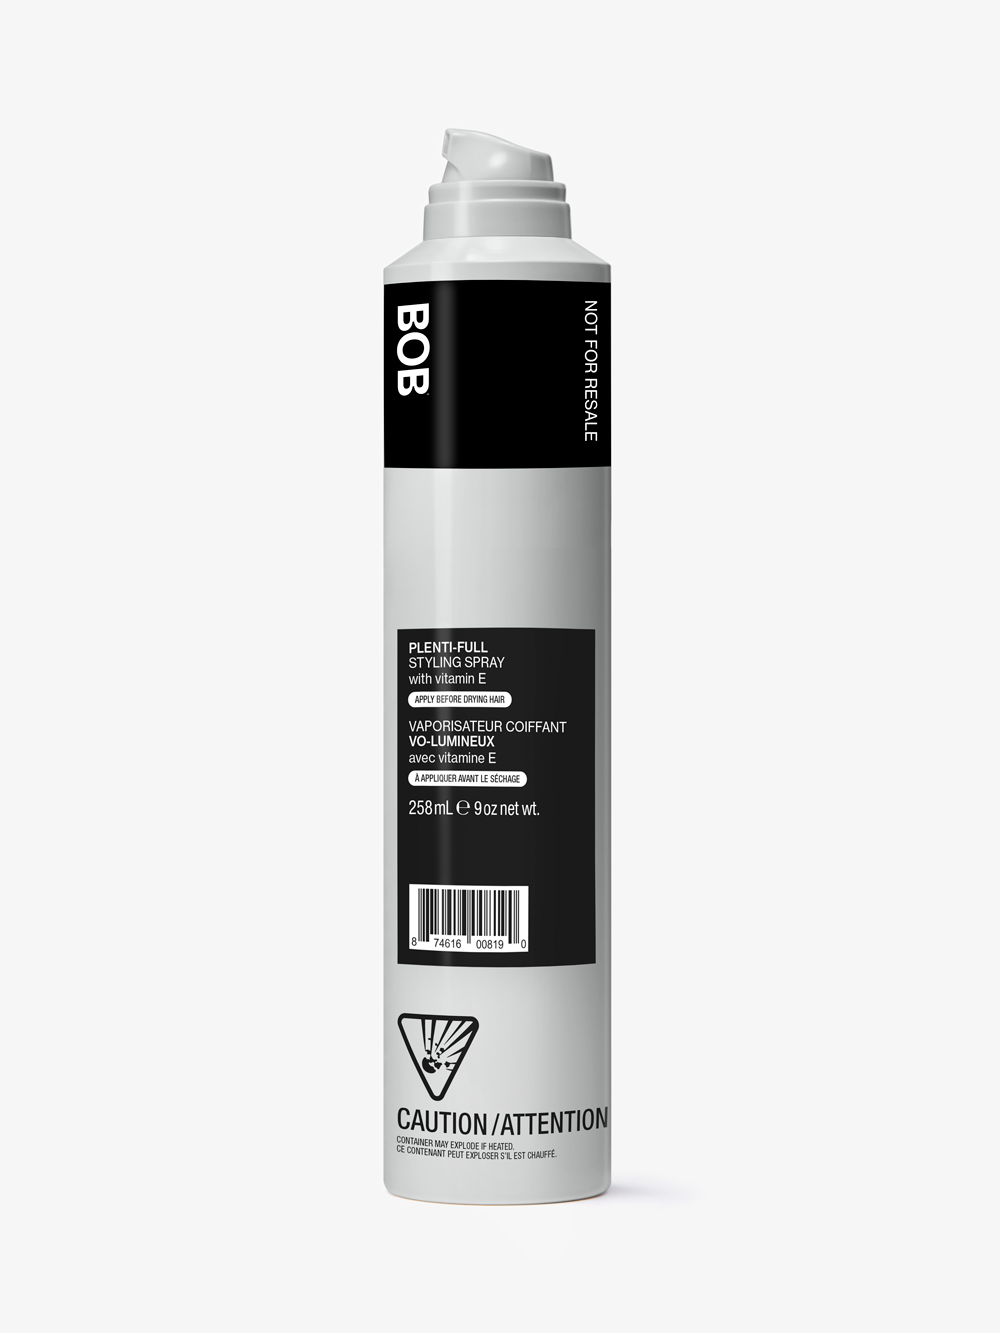 Plenti-Full Styling Spray 258 ml BBAR